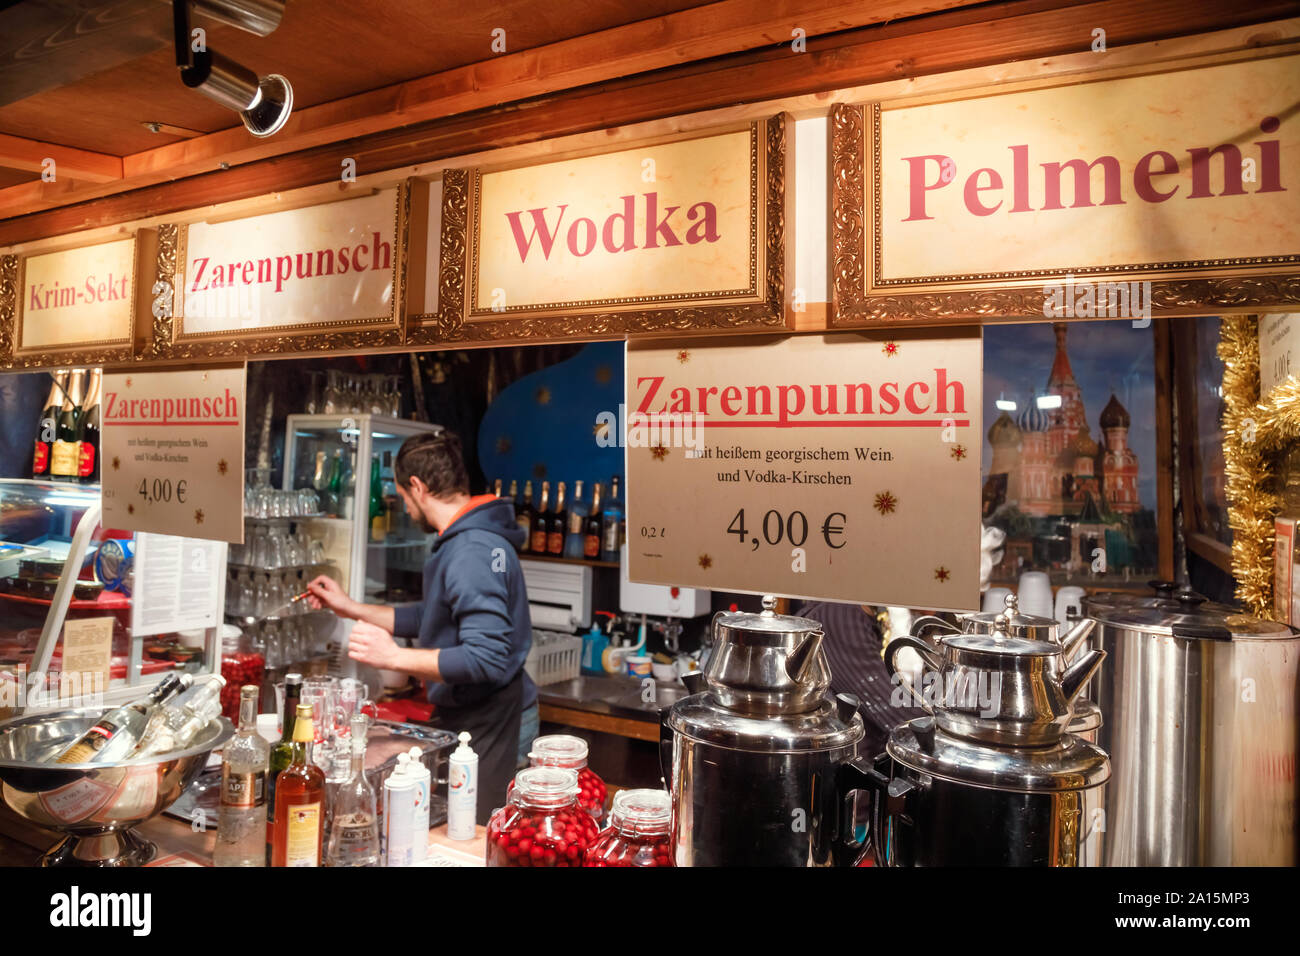 Berlin, Germany - December 12, 2018: Russian themed Christmas market stall offering Zarenpunsch (Tsar's punch), Wodka (Vodka) and Pelmeni (Russian sty Stock Photo